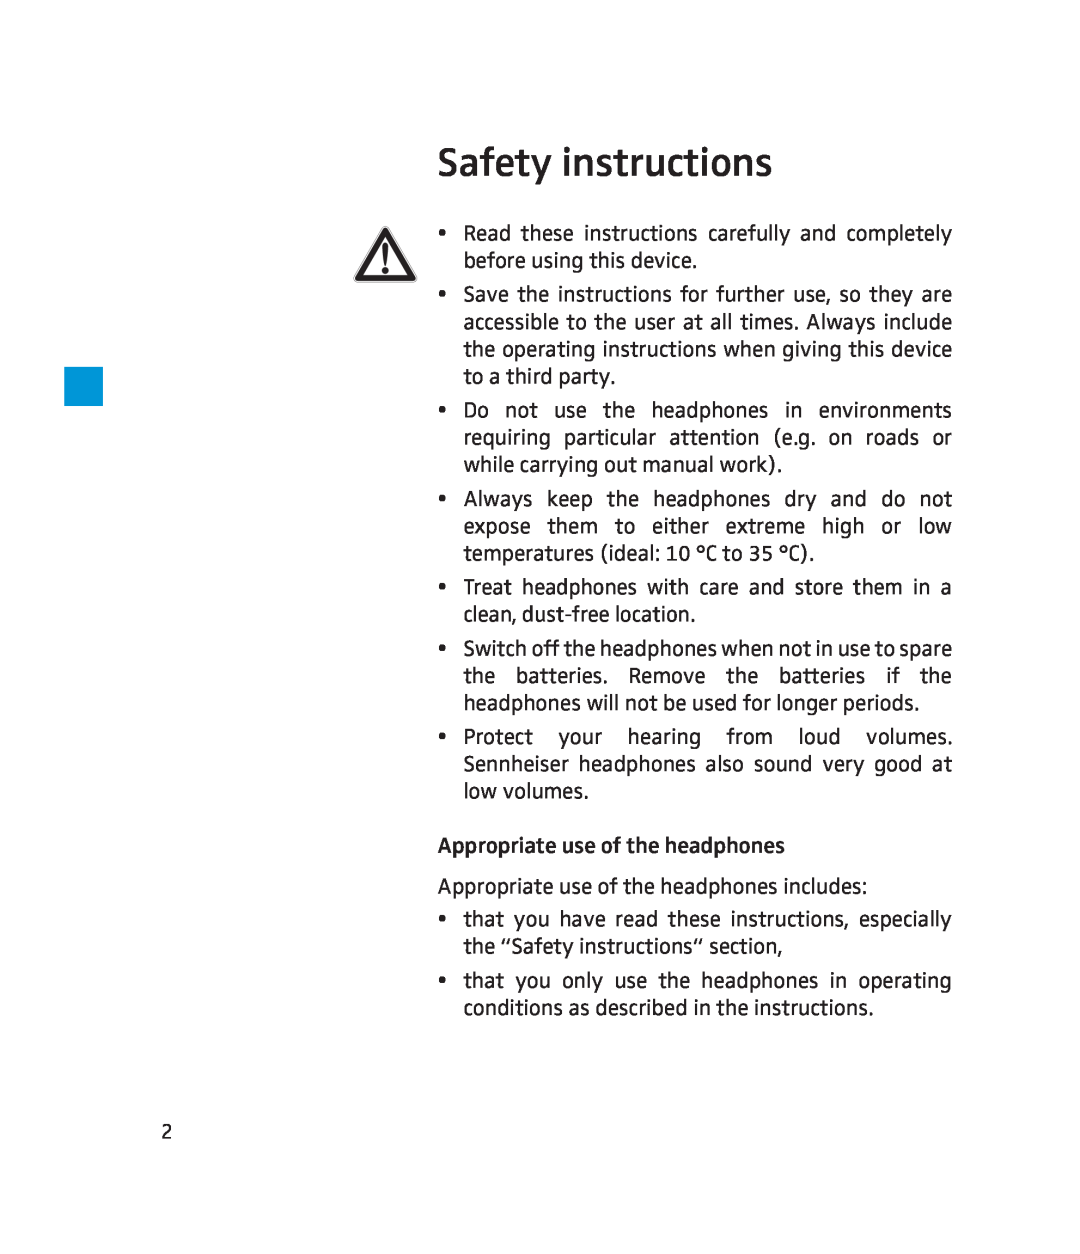 Sennheiser PXC 450 instruction manual Safety instructions 